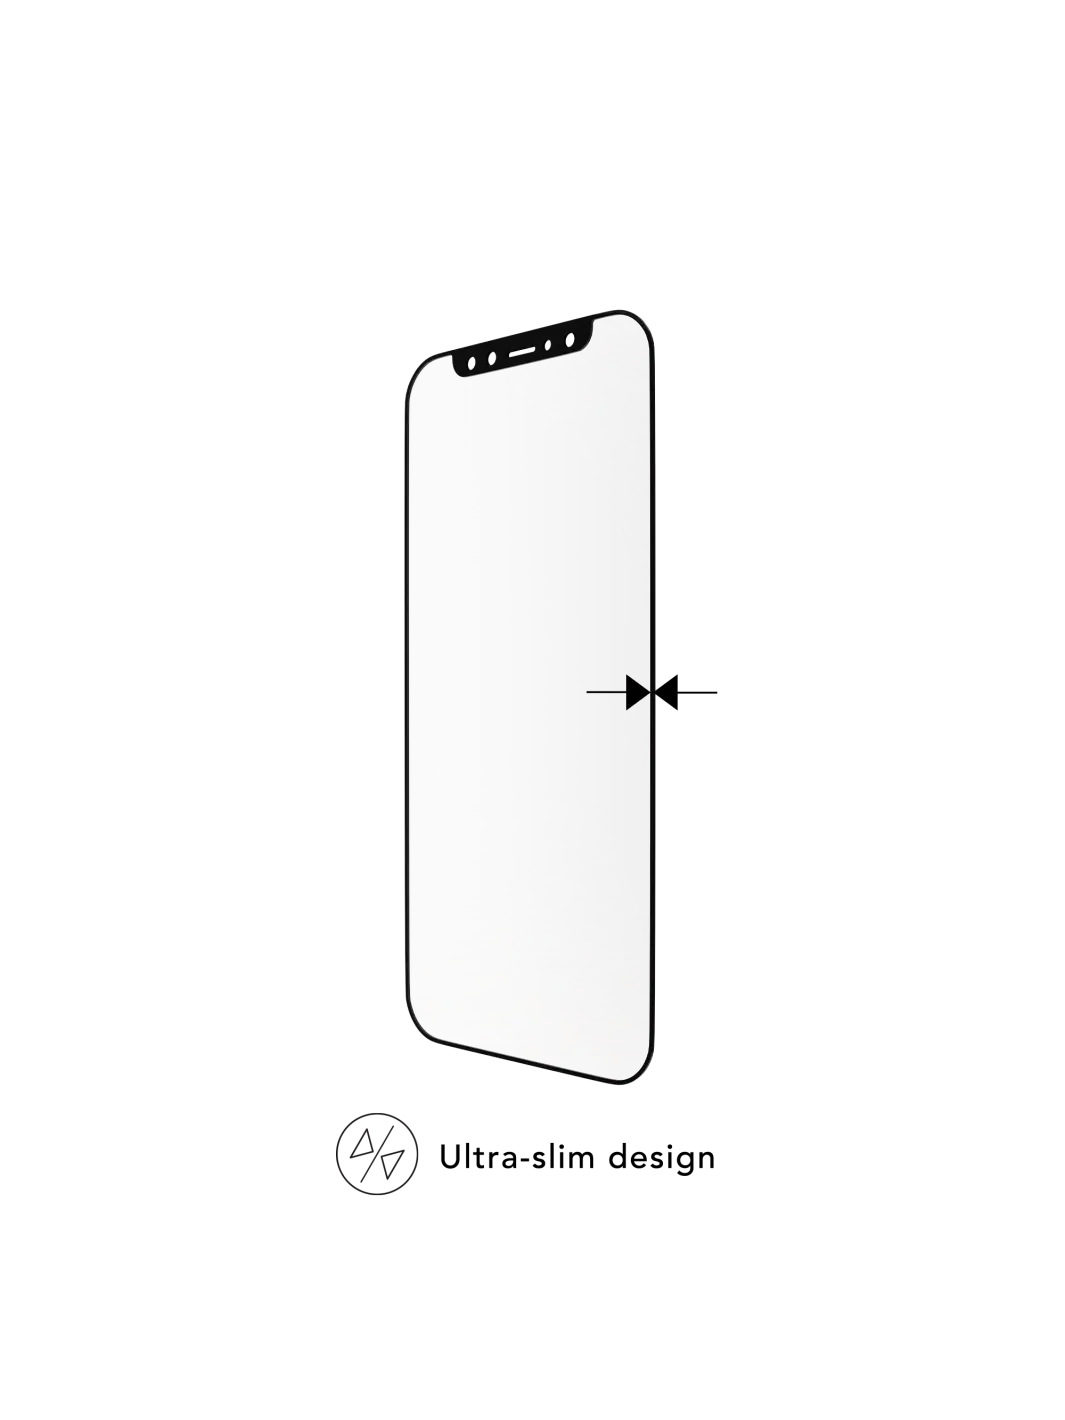 eco-shield - Phones iPhone X/Xs/11 Pro Phone Cases